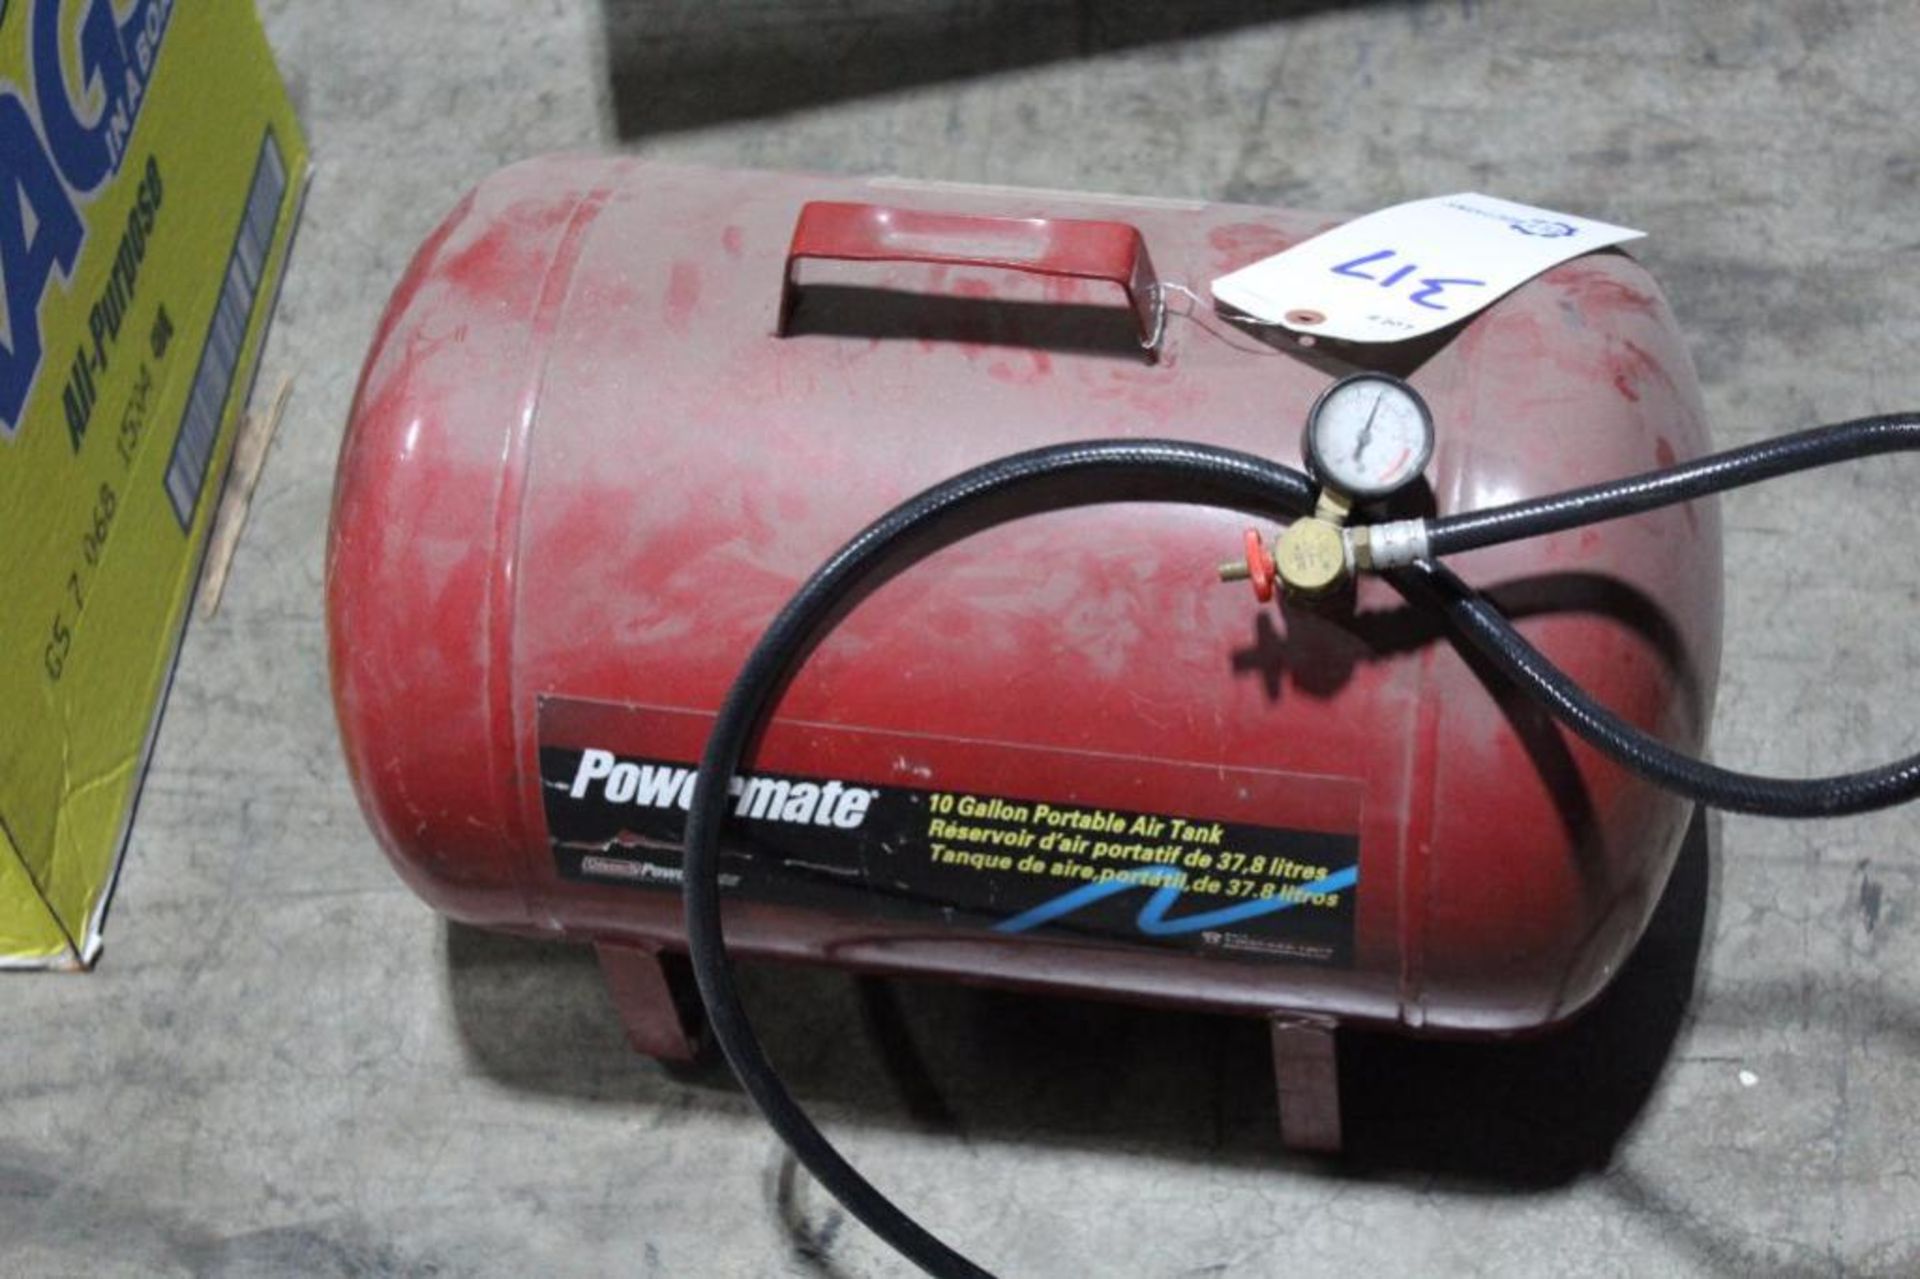 Powermate 10 gallon portable air tank